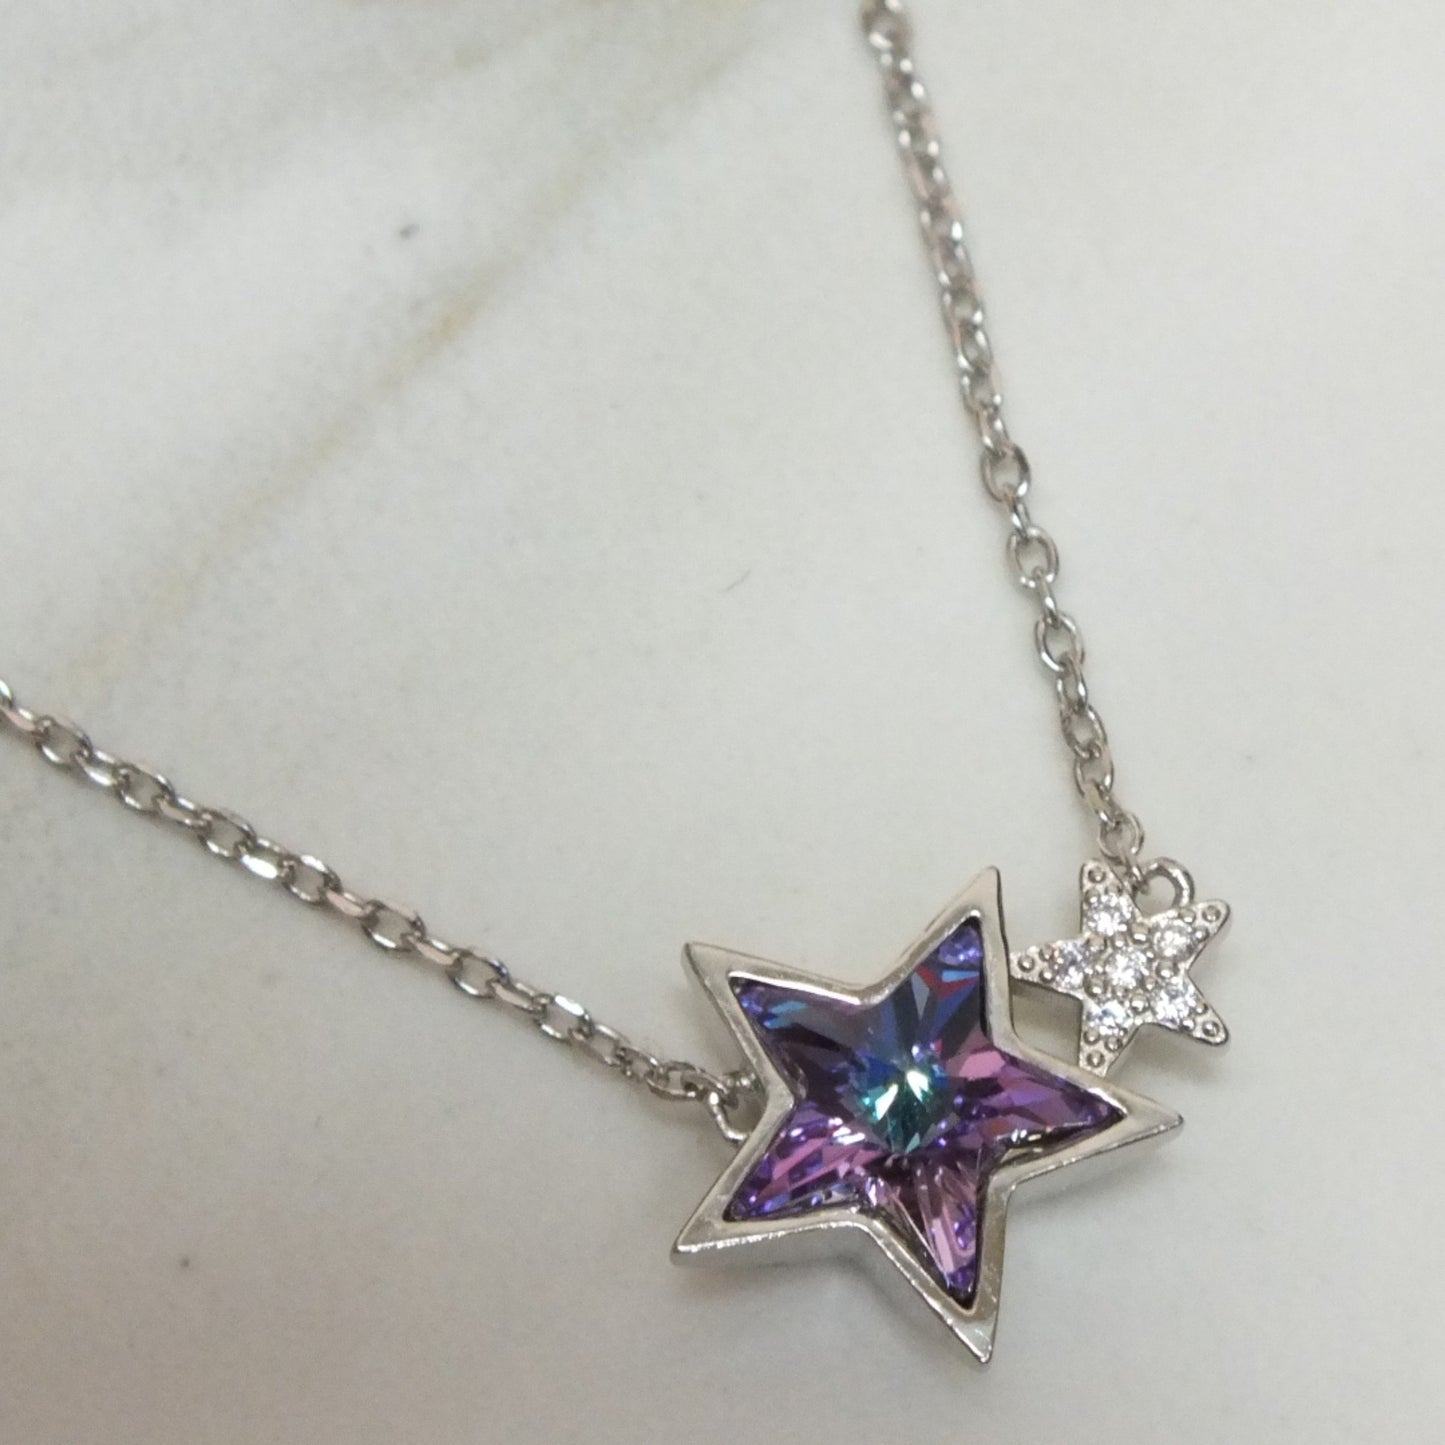 Colored Stone Star Silver Necklace - سلسال فضة نجوم بحجر ملون